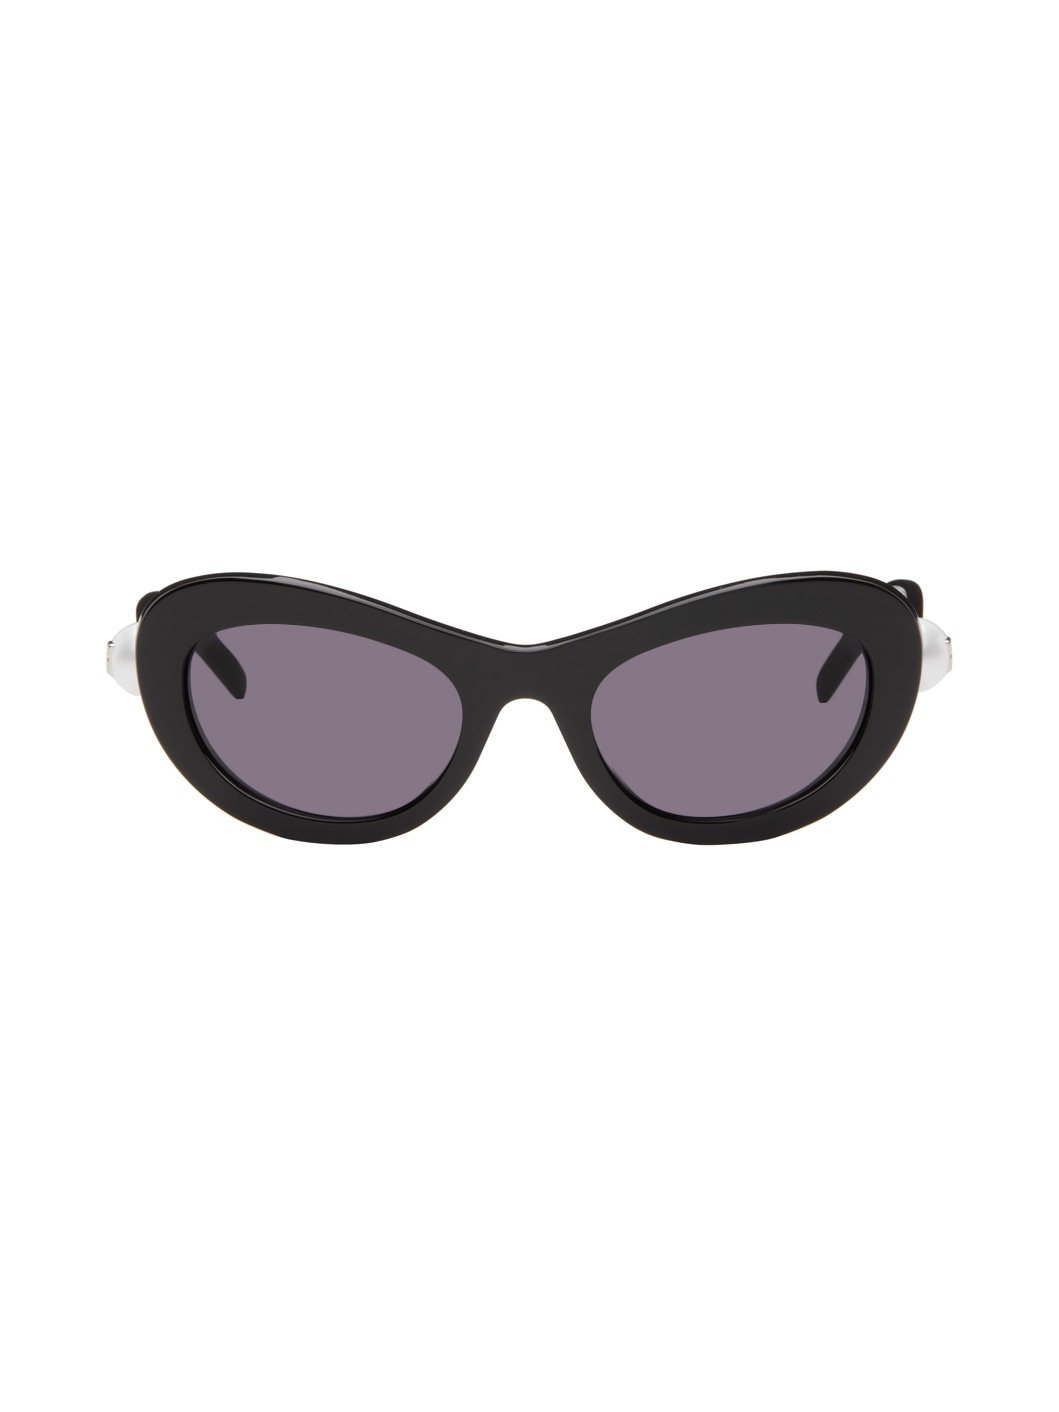 Black 4G Pearl Sunglasses - 1